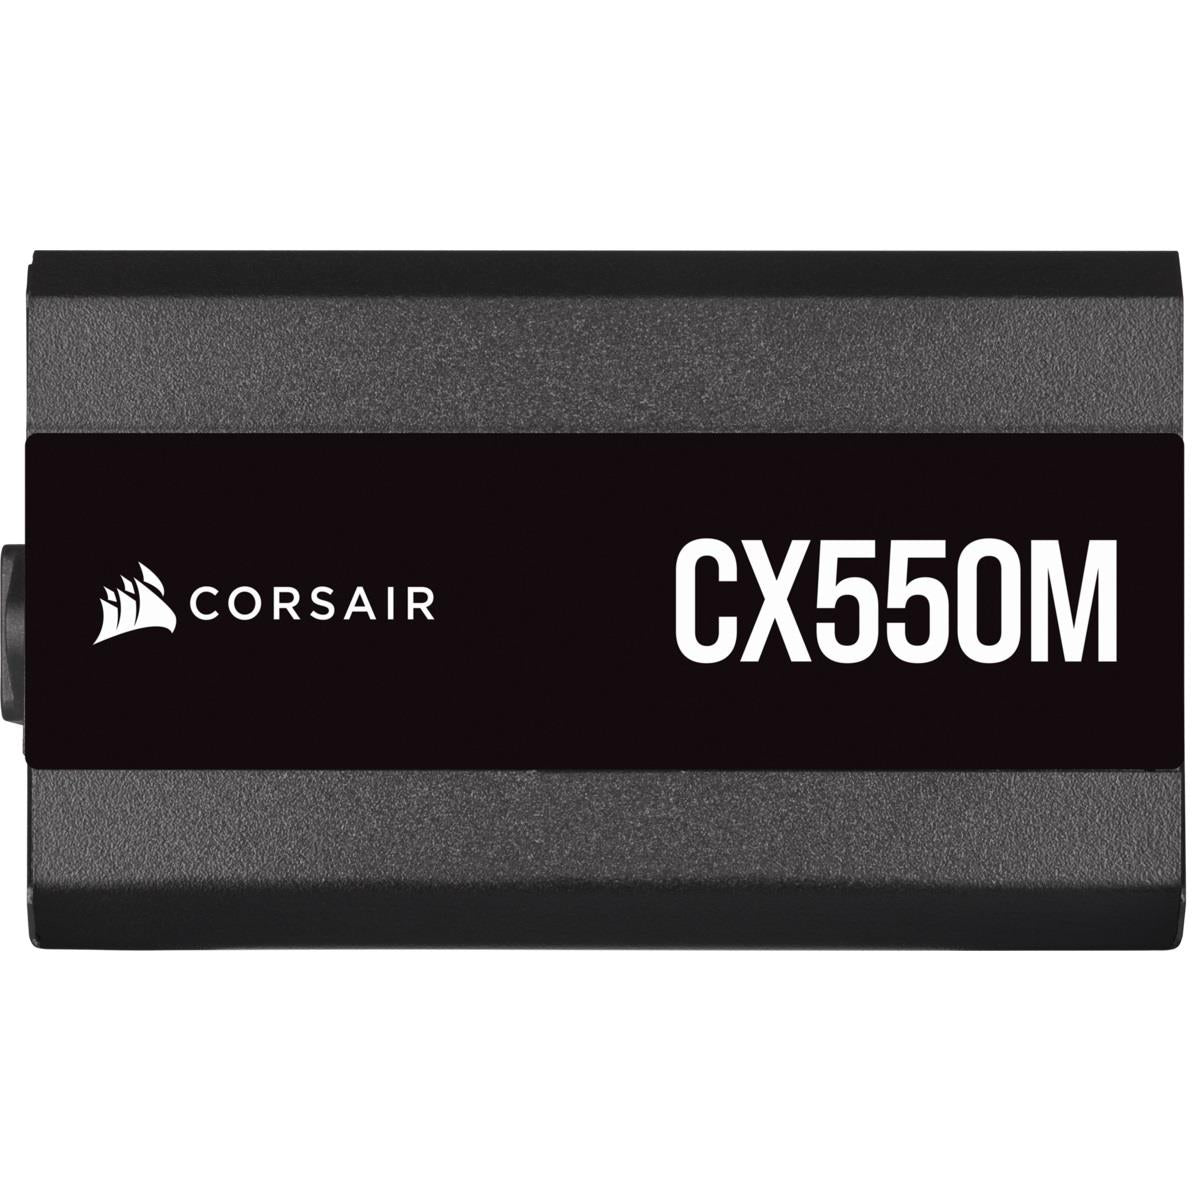 Corsair CX550M - 550W - 80+ Bronze Corsair